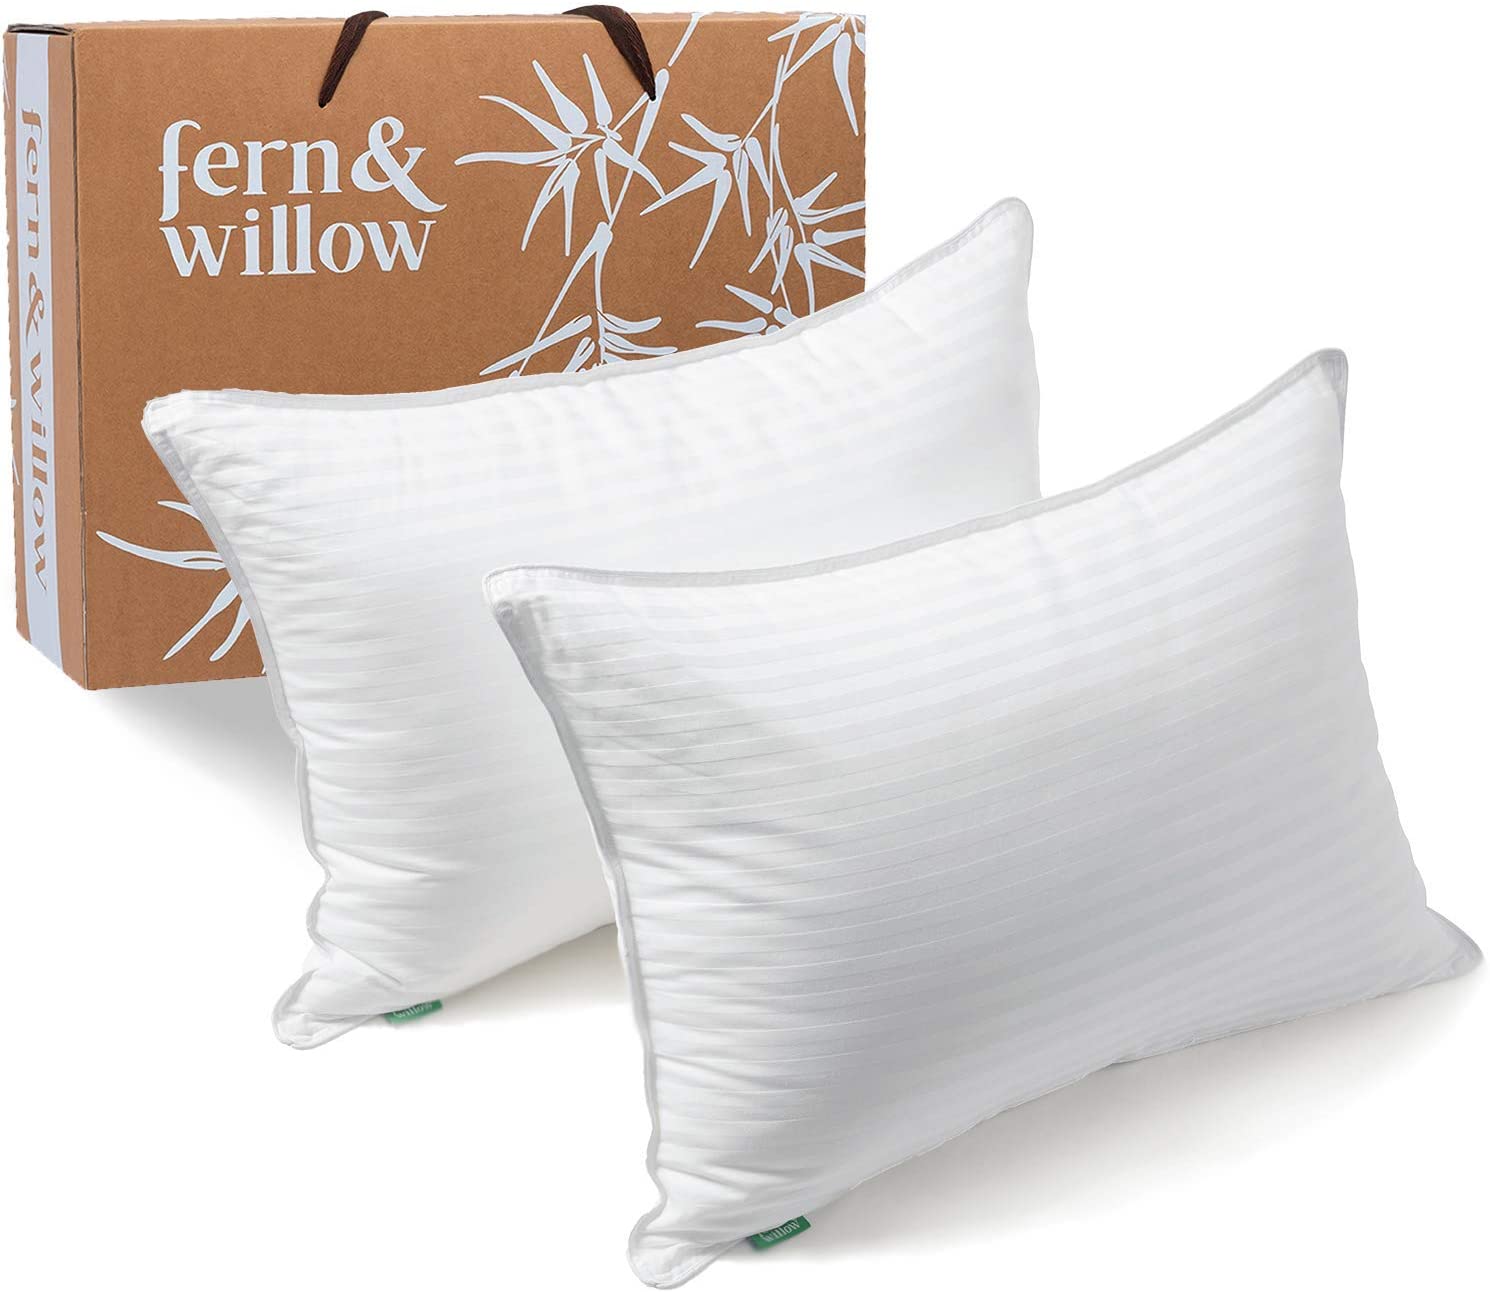 Fern & Willow Hypoallergenic Gel Pillows, 2-Pack